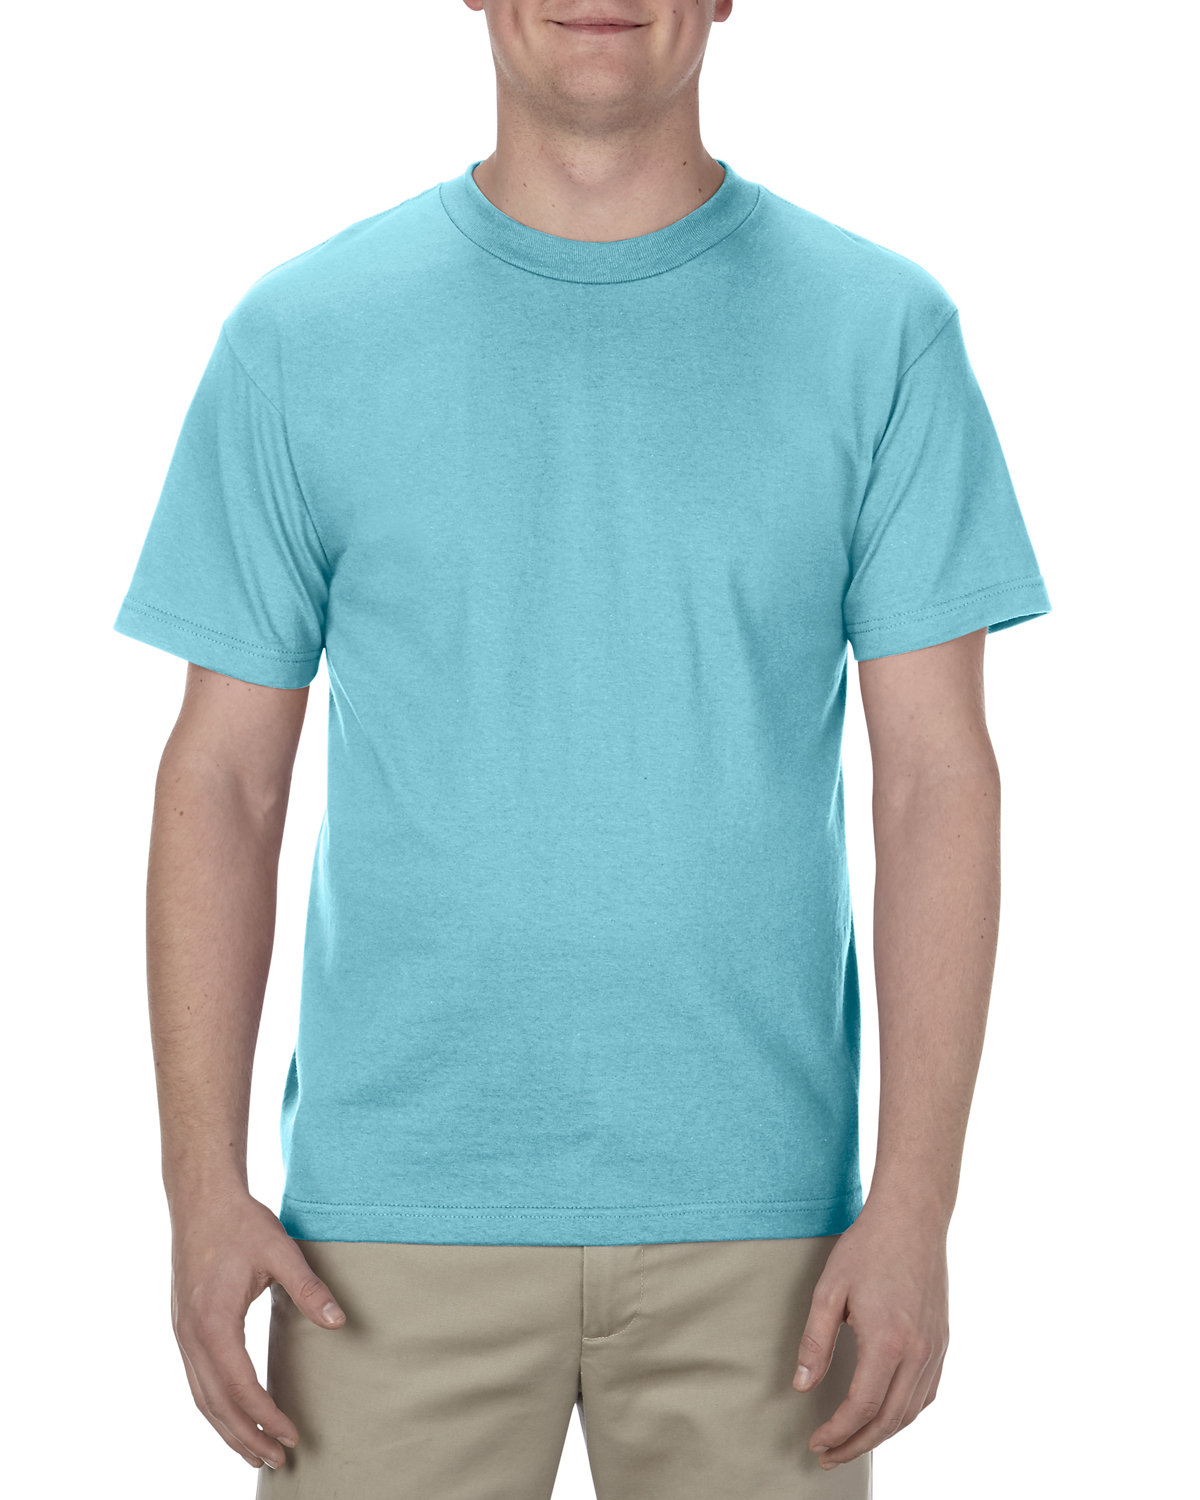 American Apparel Unisex Heavyweight Cotton T-Shirt pacific blue 